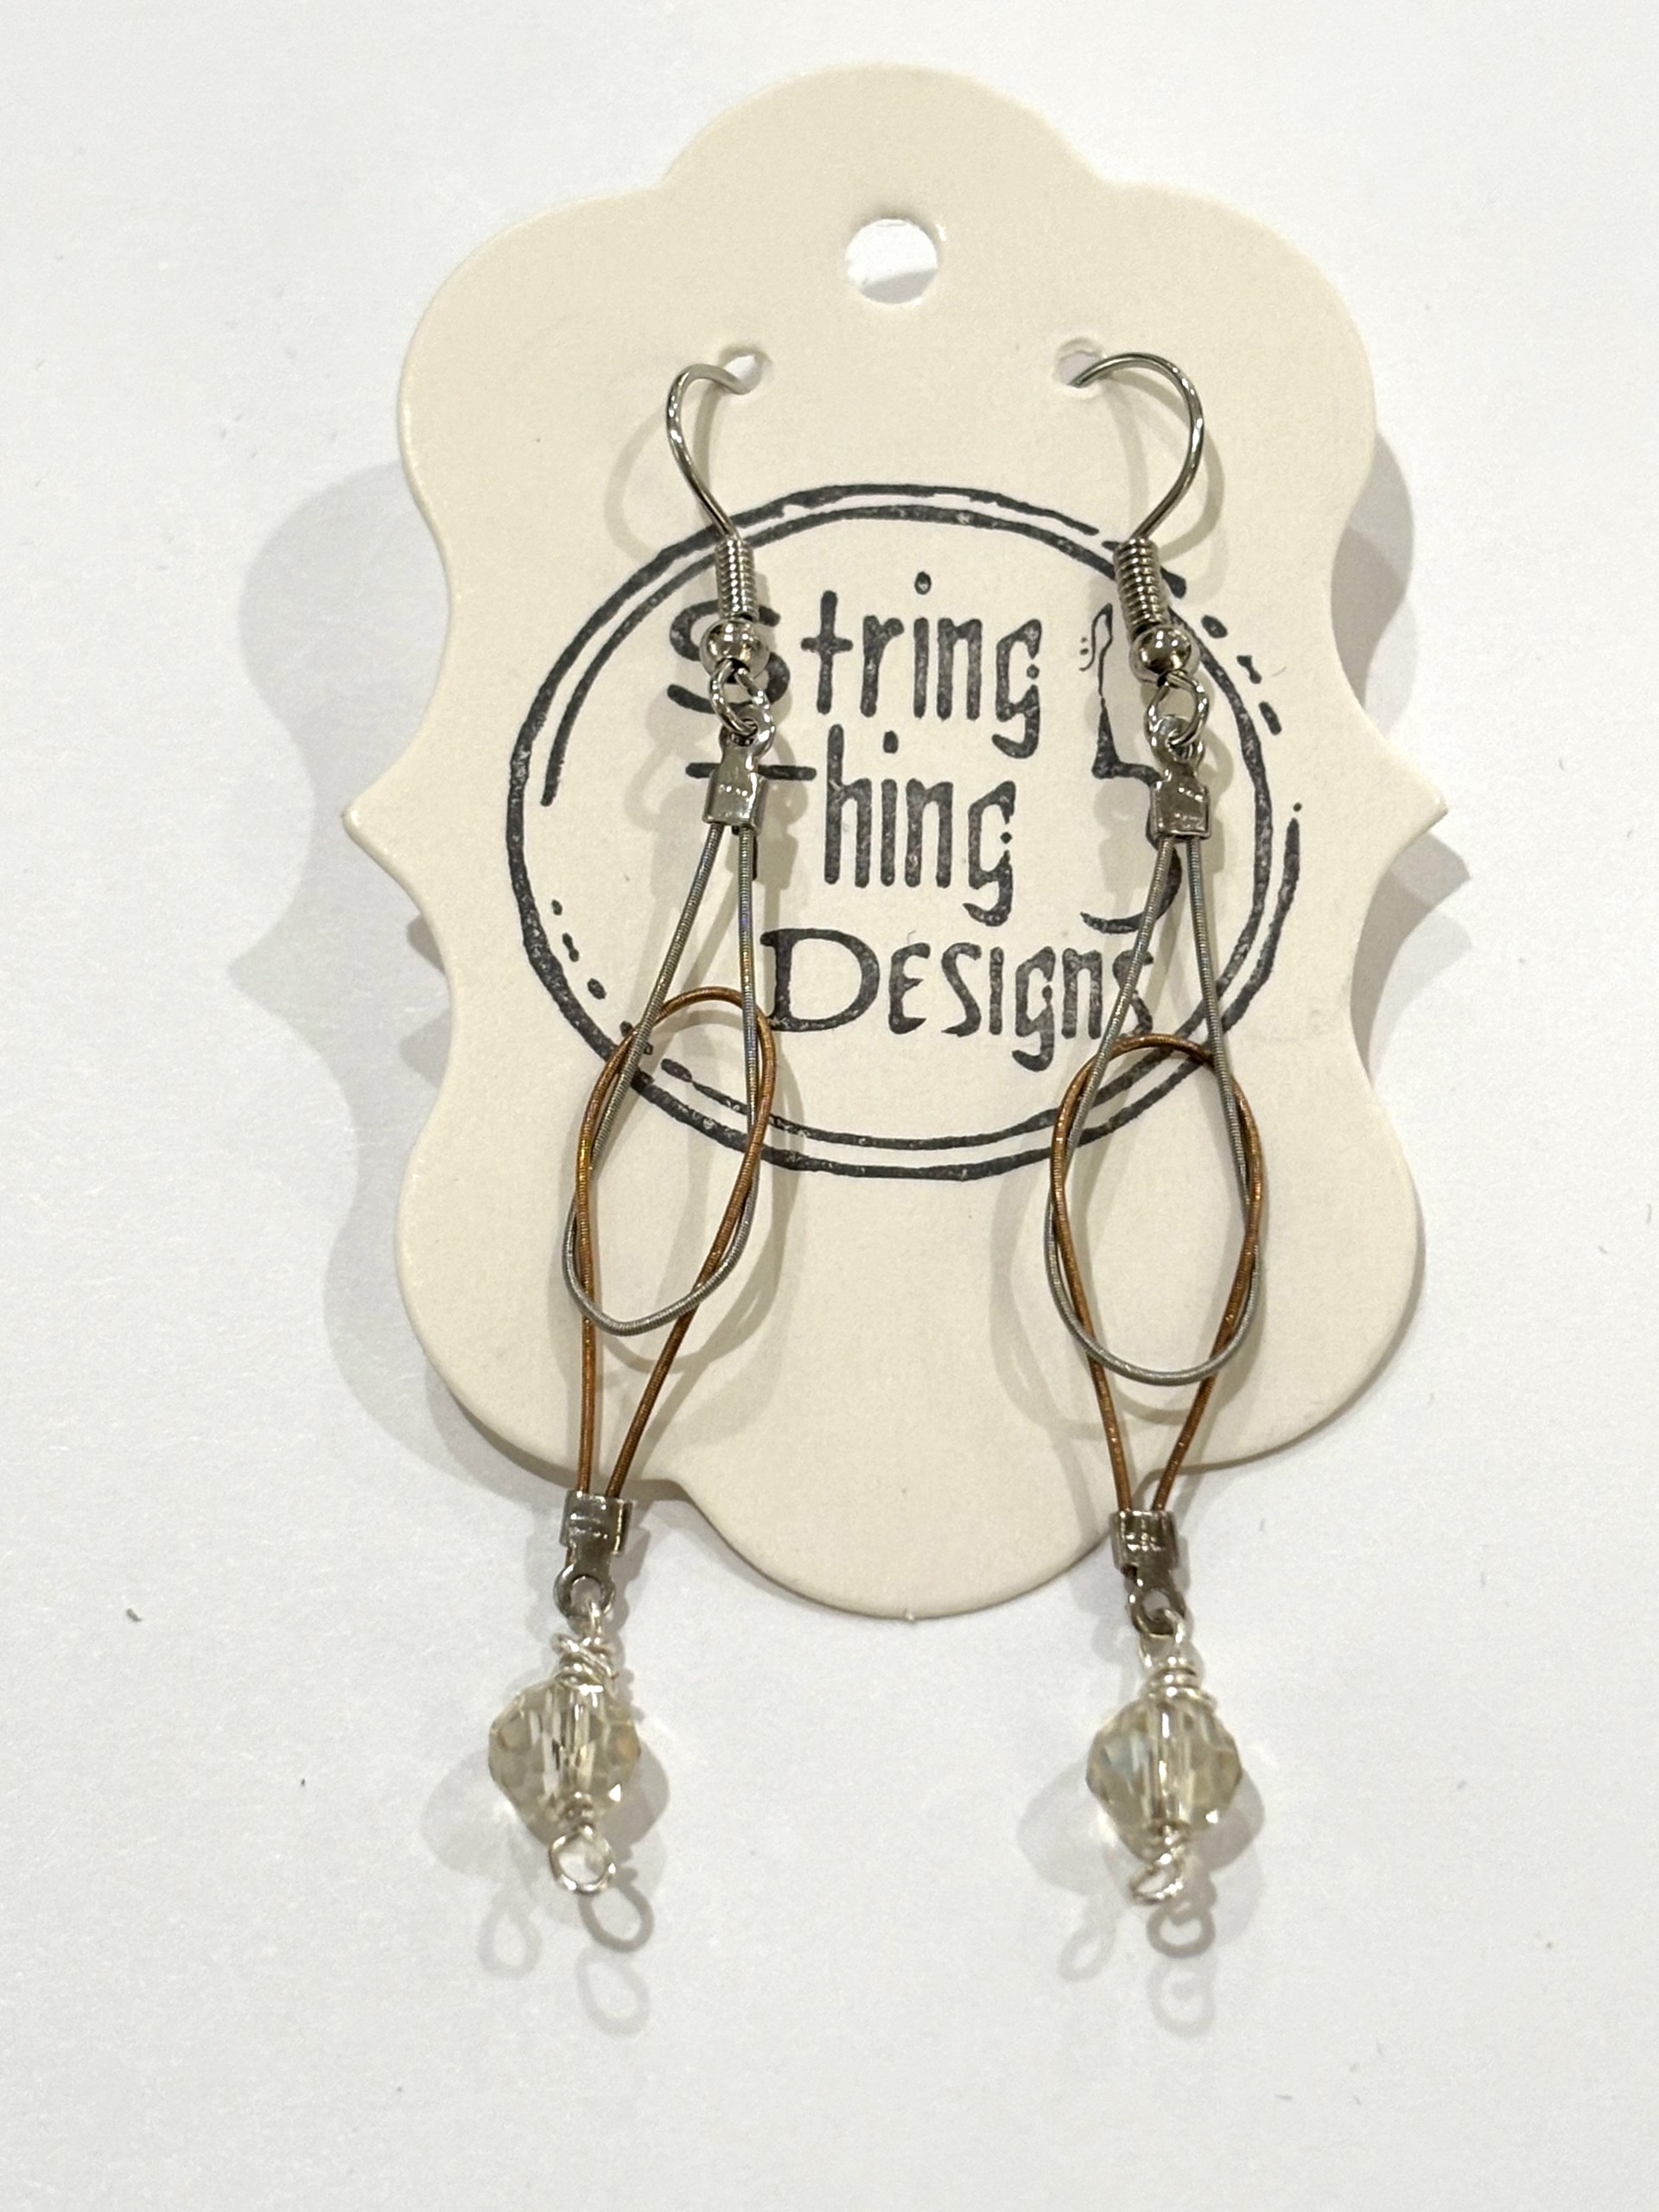 Bead Guitar String Earrings by String Thing Designs